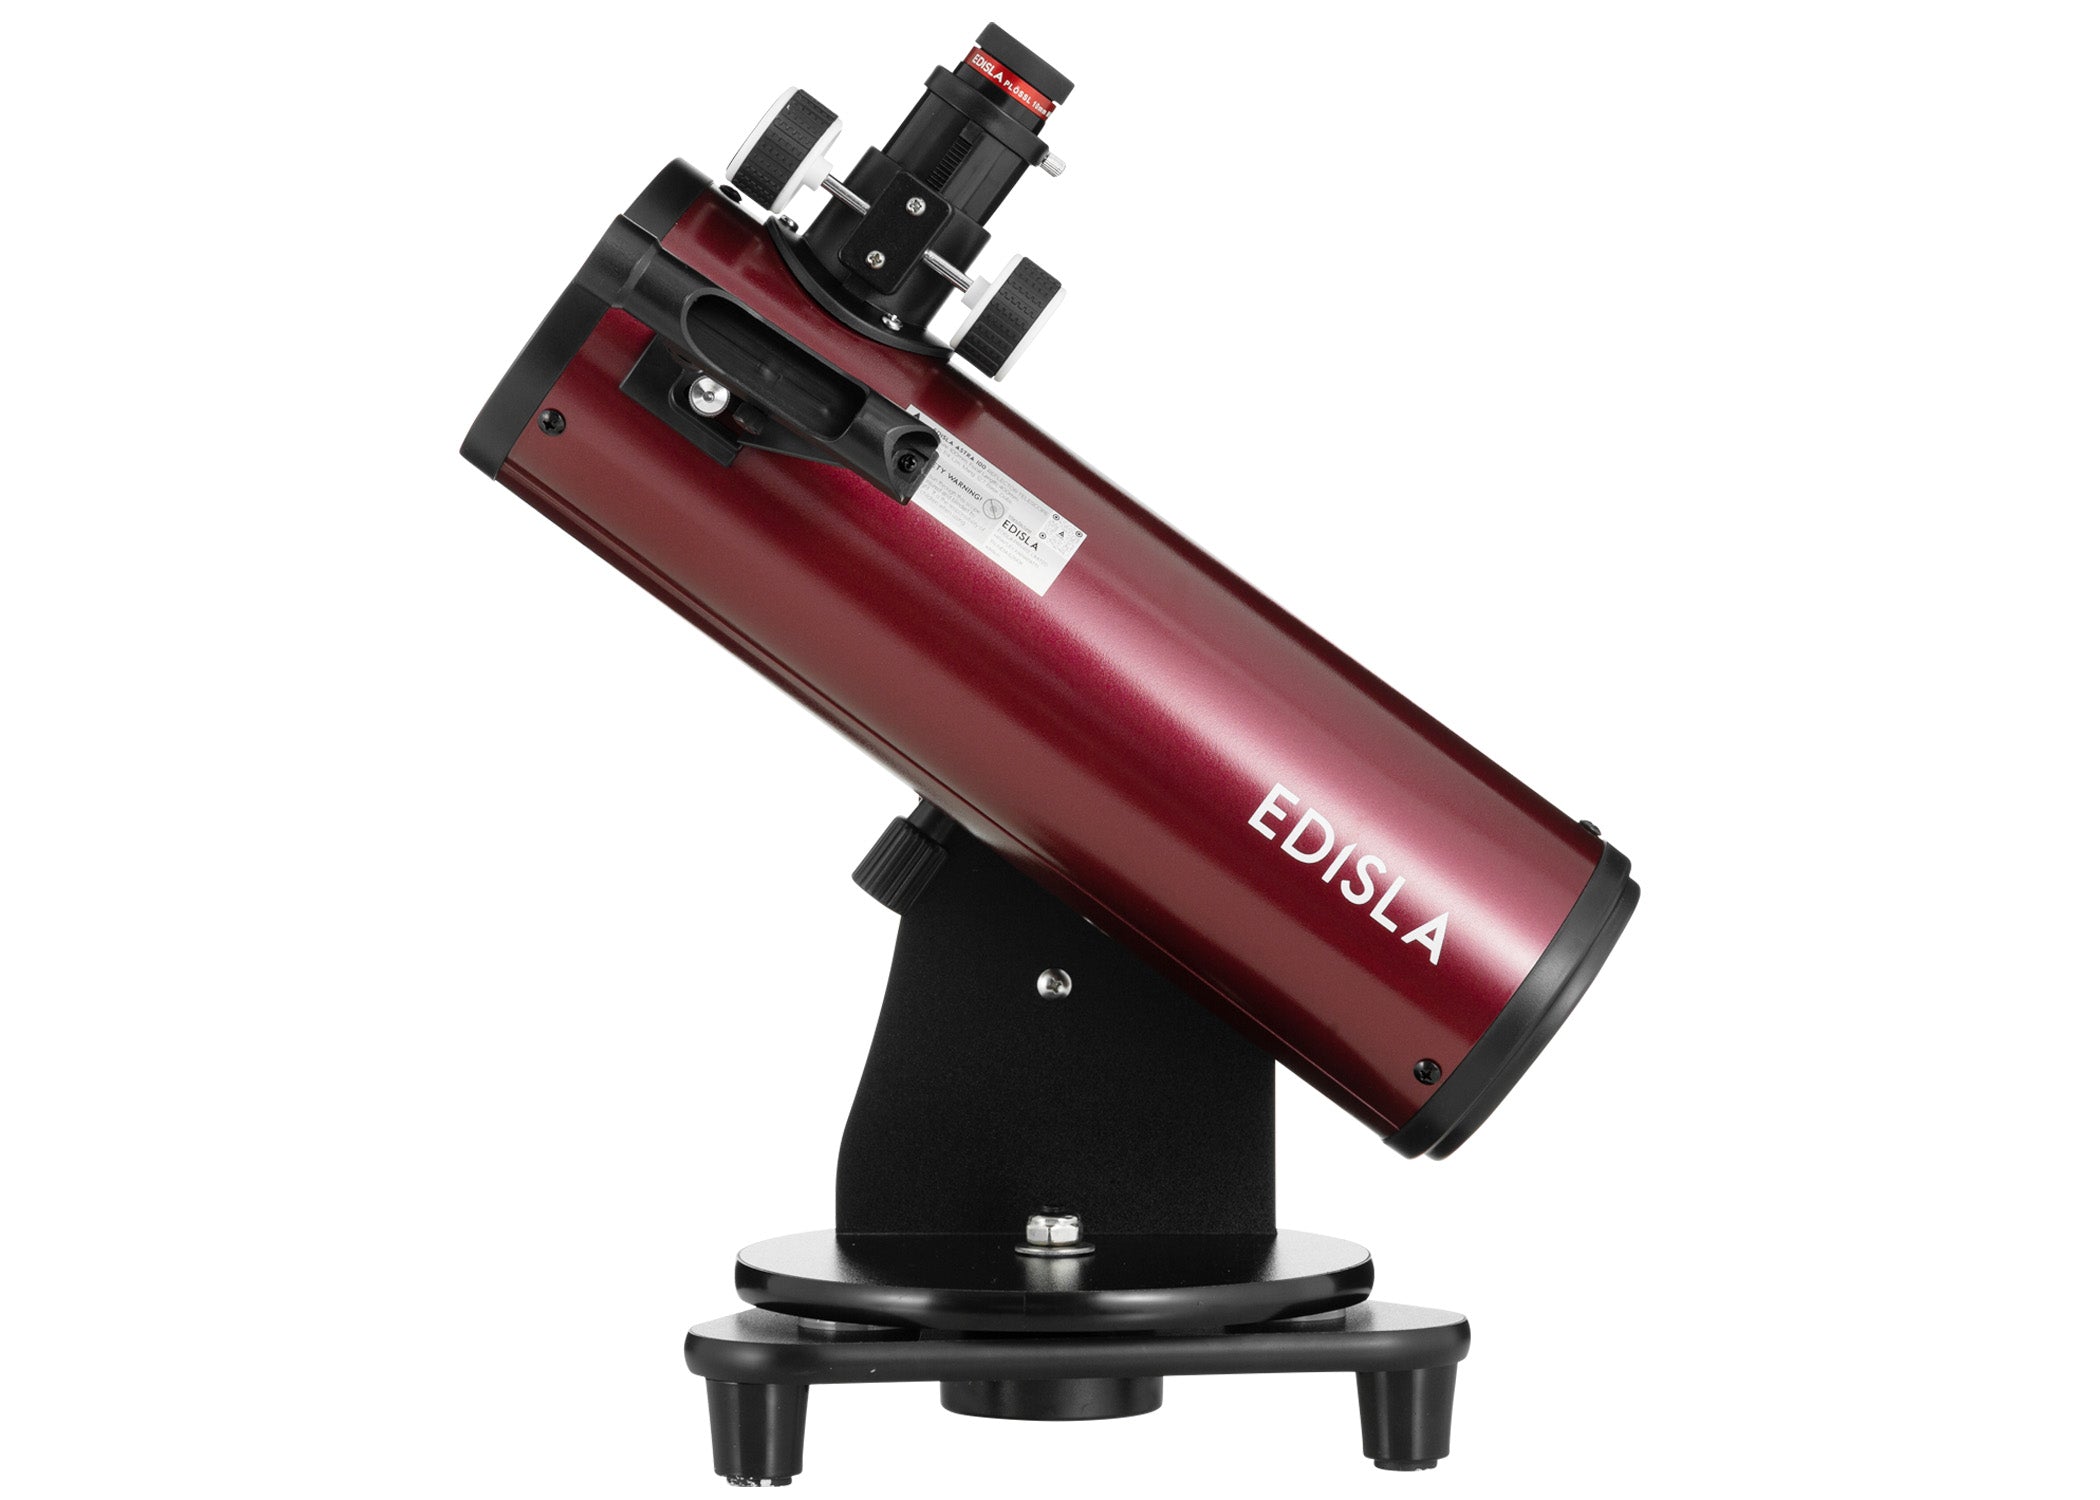 EDISLA Astra 100 Table Top Reflector Dobsonian Telescope - EDISLA